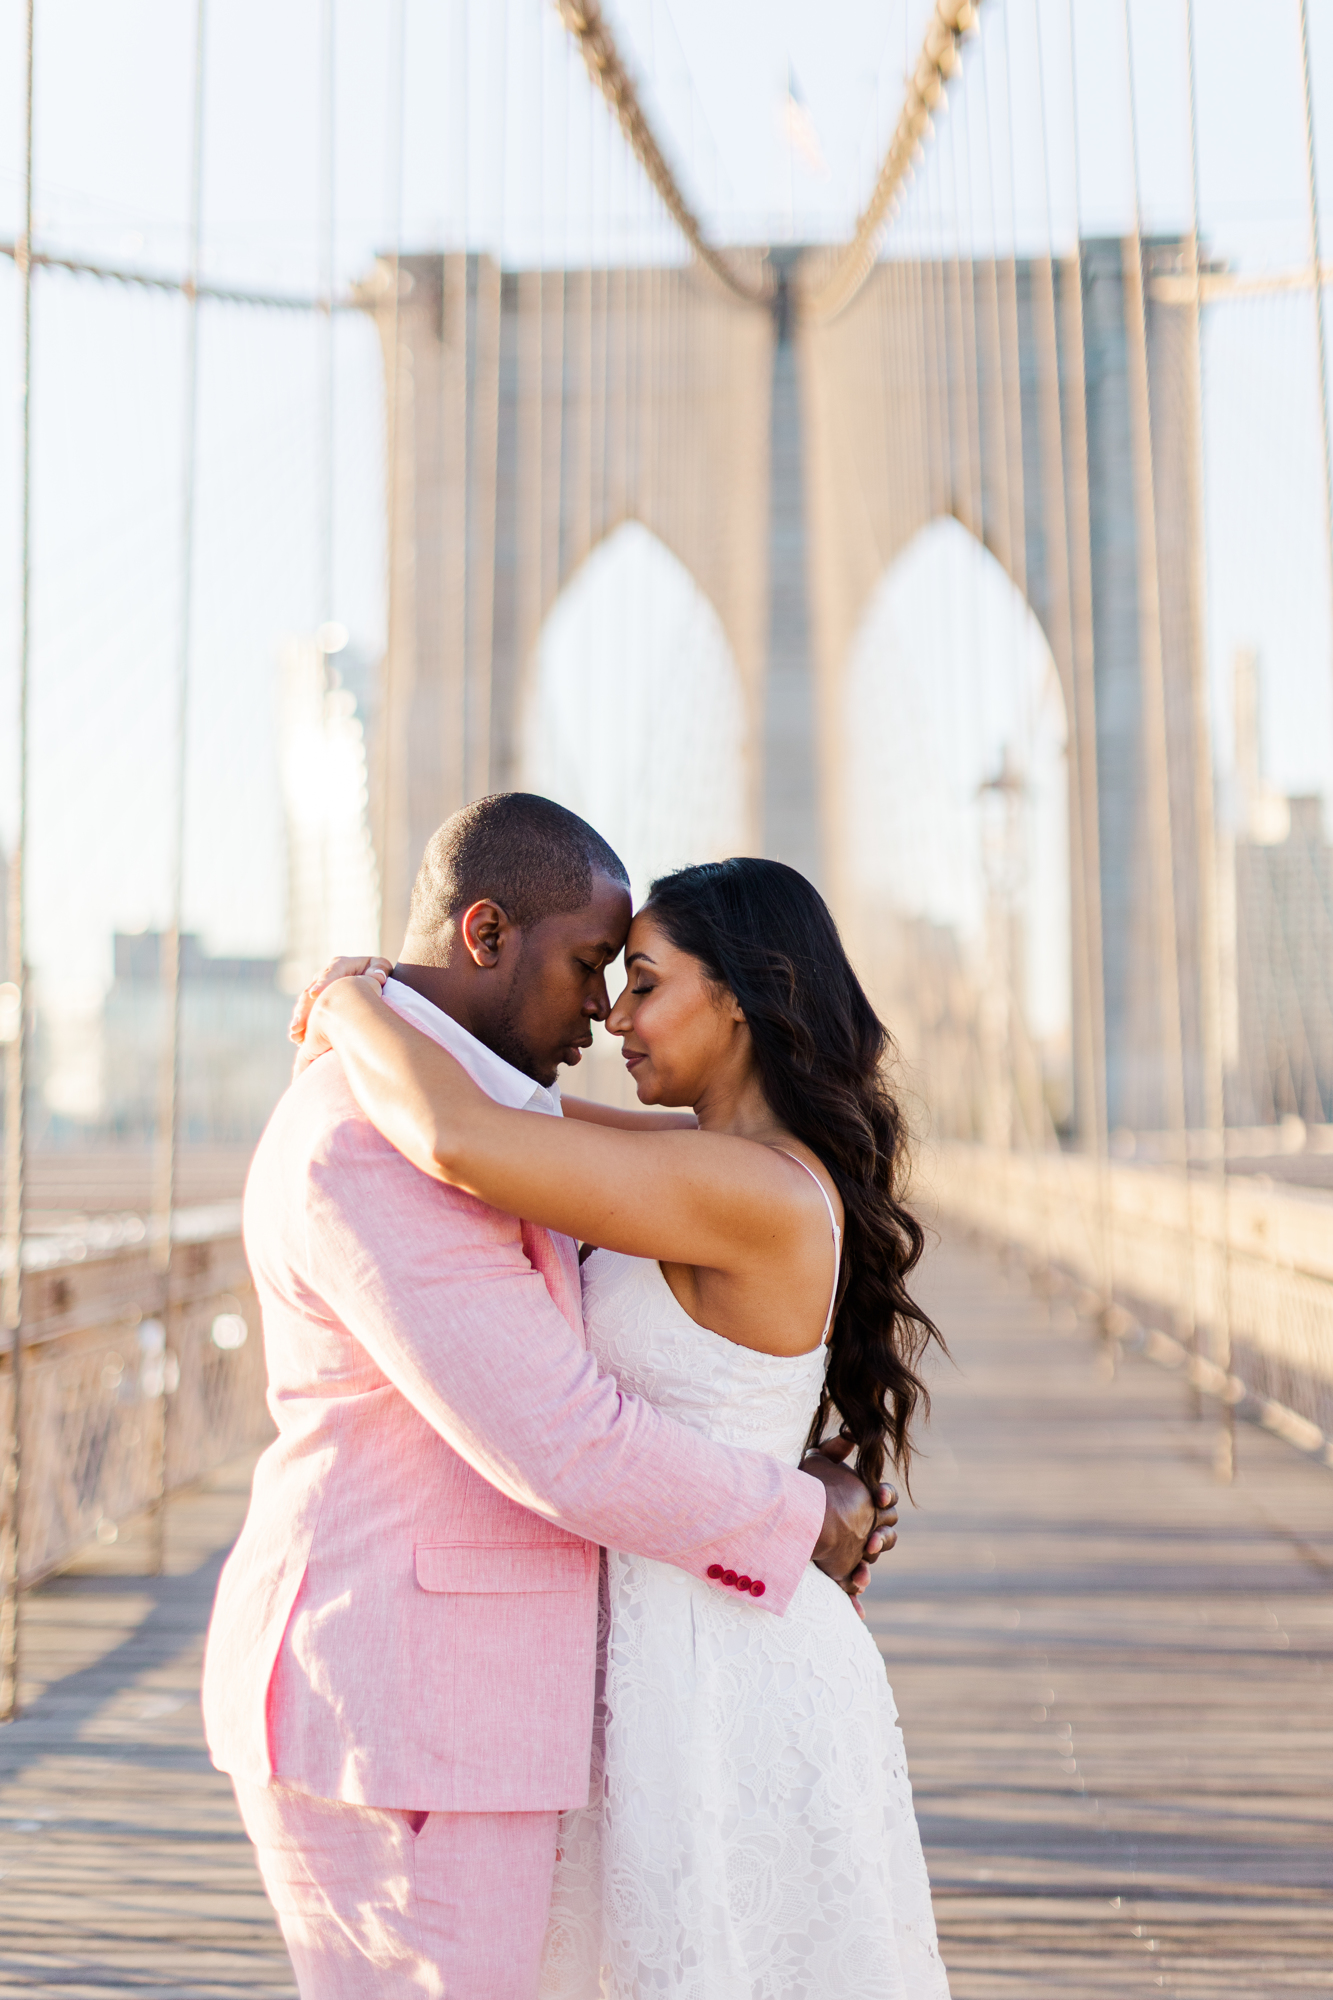 Romantic Engagement Photos at Sunrise, New York